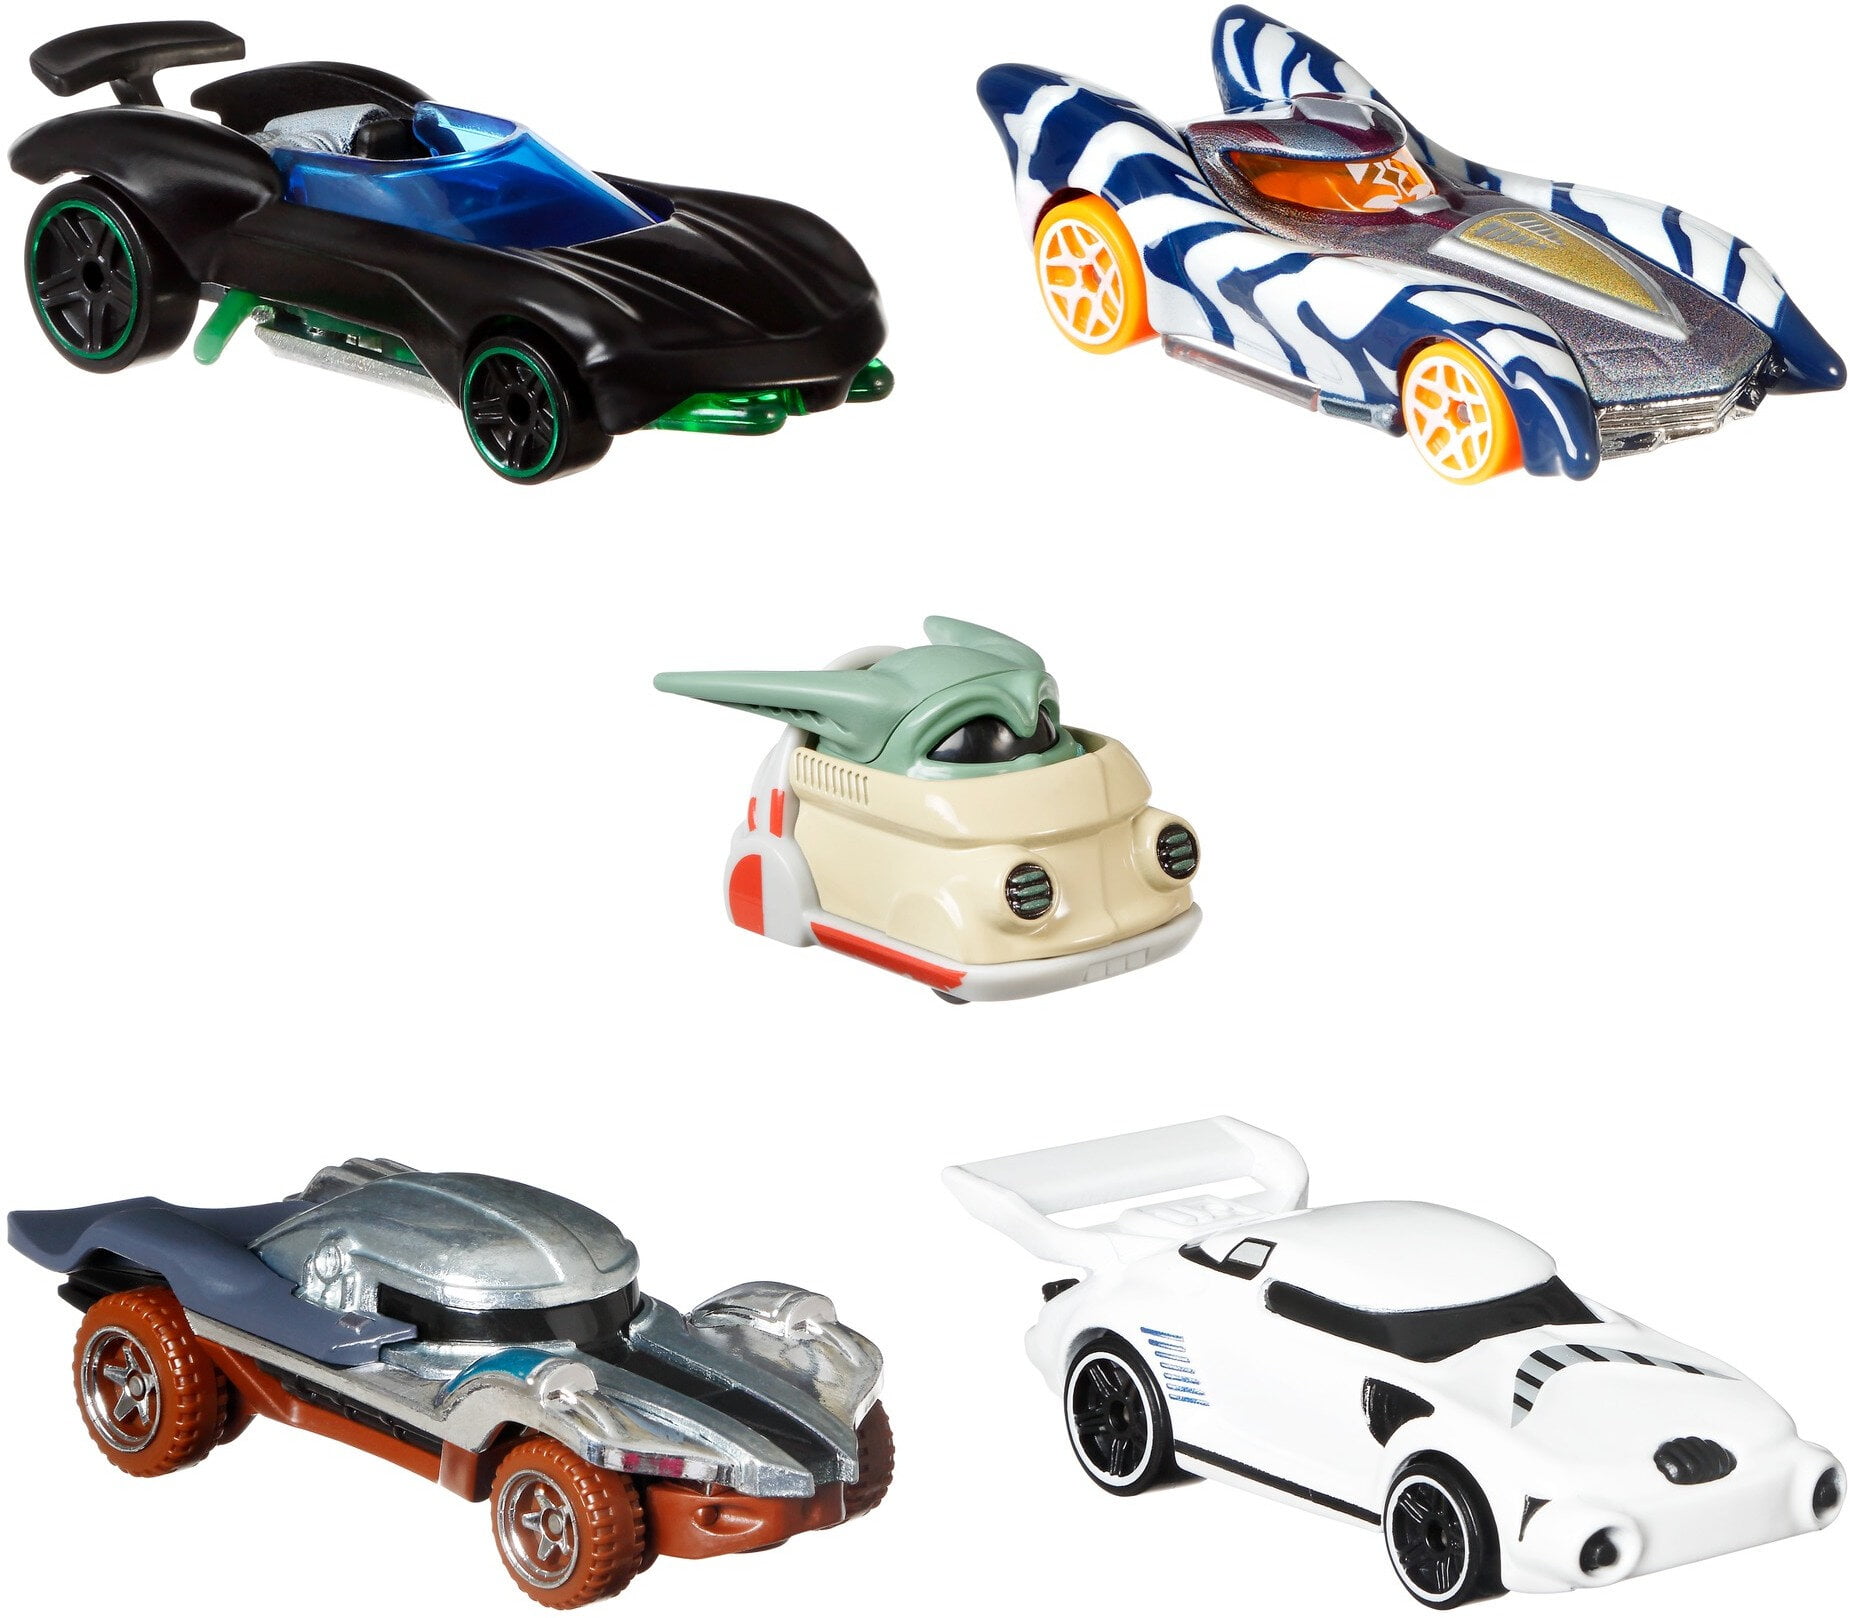 New Hot Wheels Character Cars 4th Anniversary Star Wars Car Set of 6 